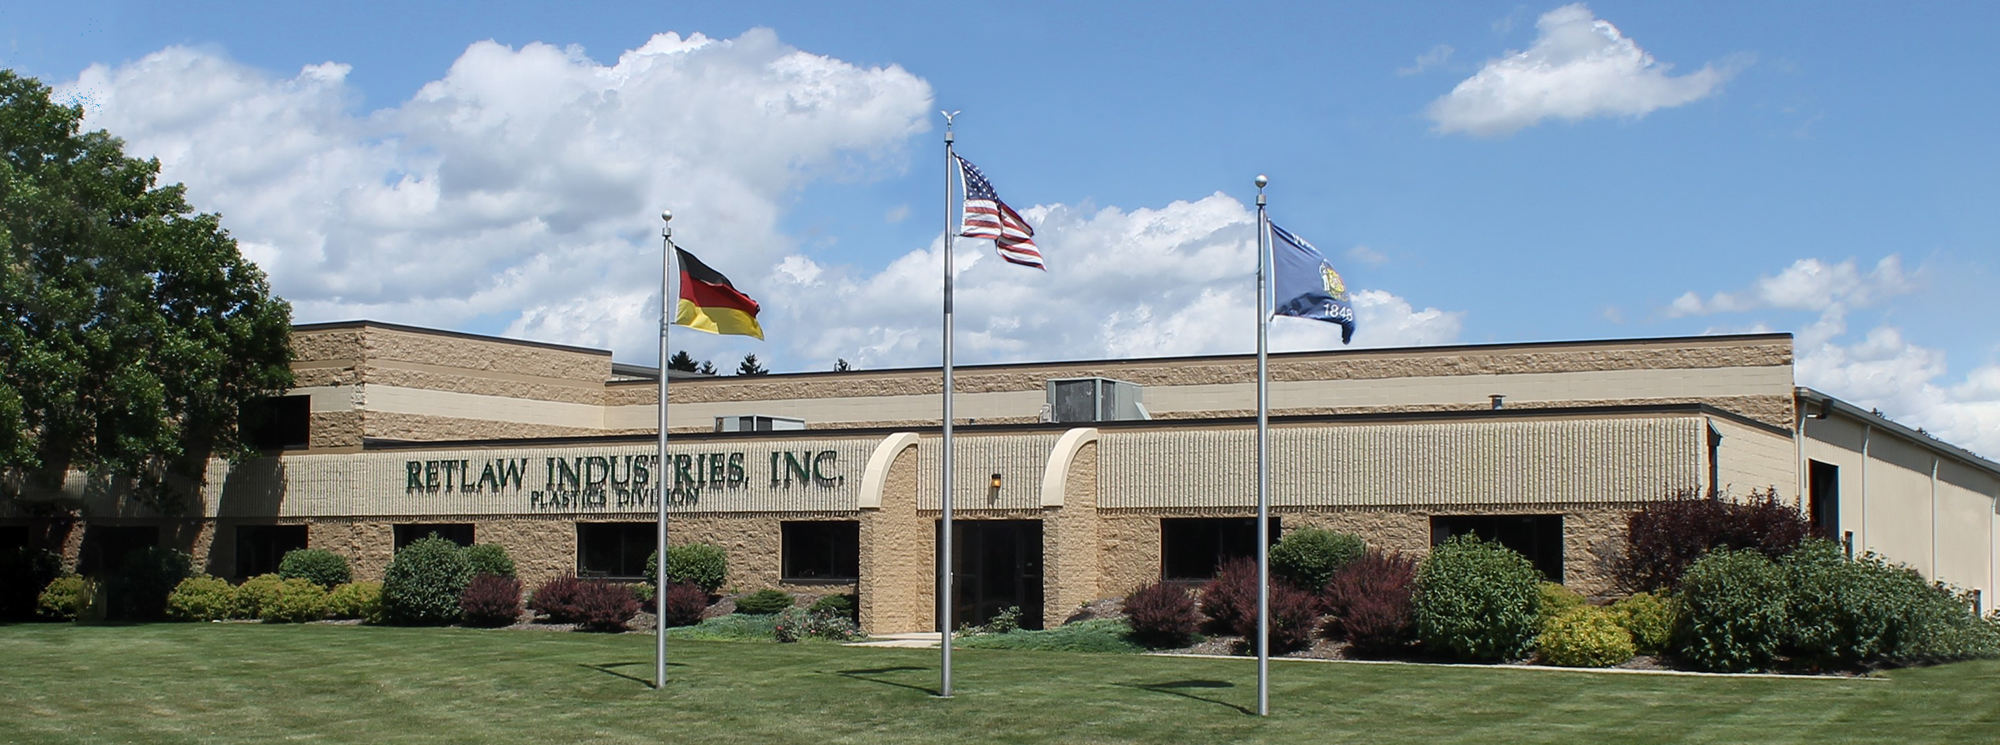 Retlaw Industries Inc Plastics Division Serving Wisconsin & the United States